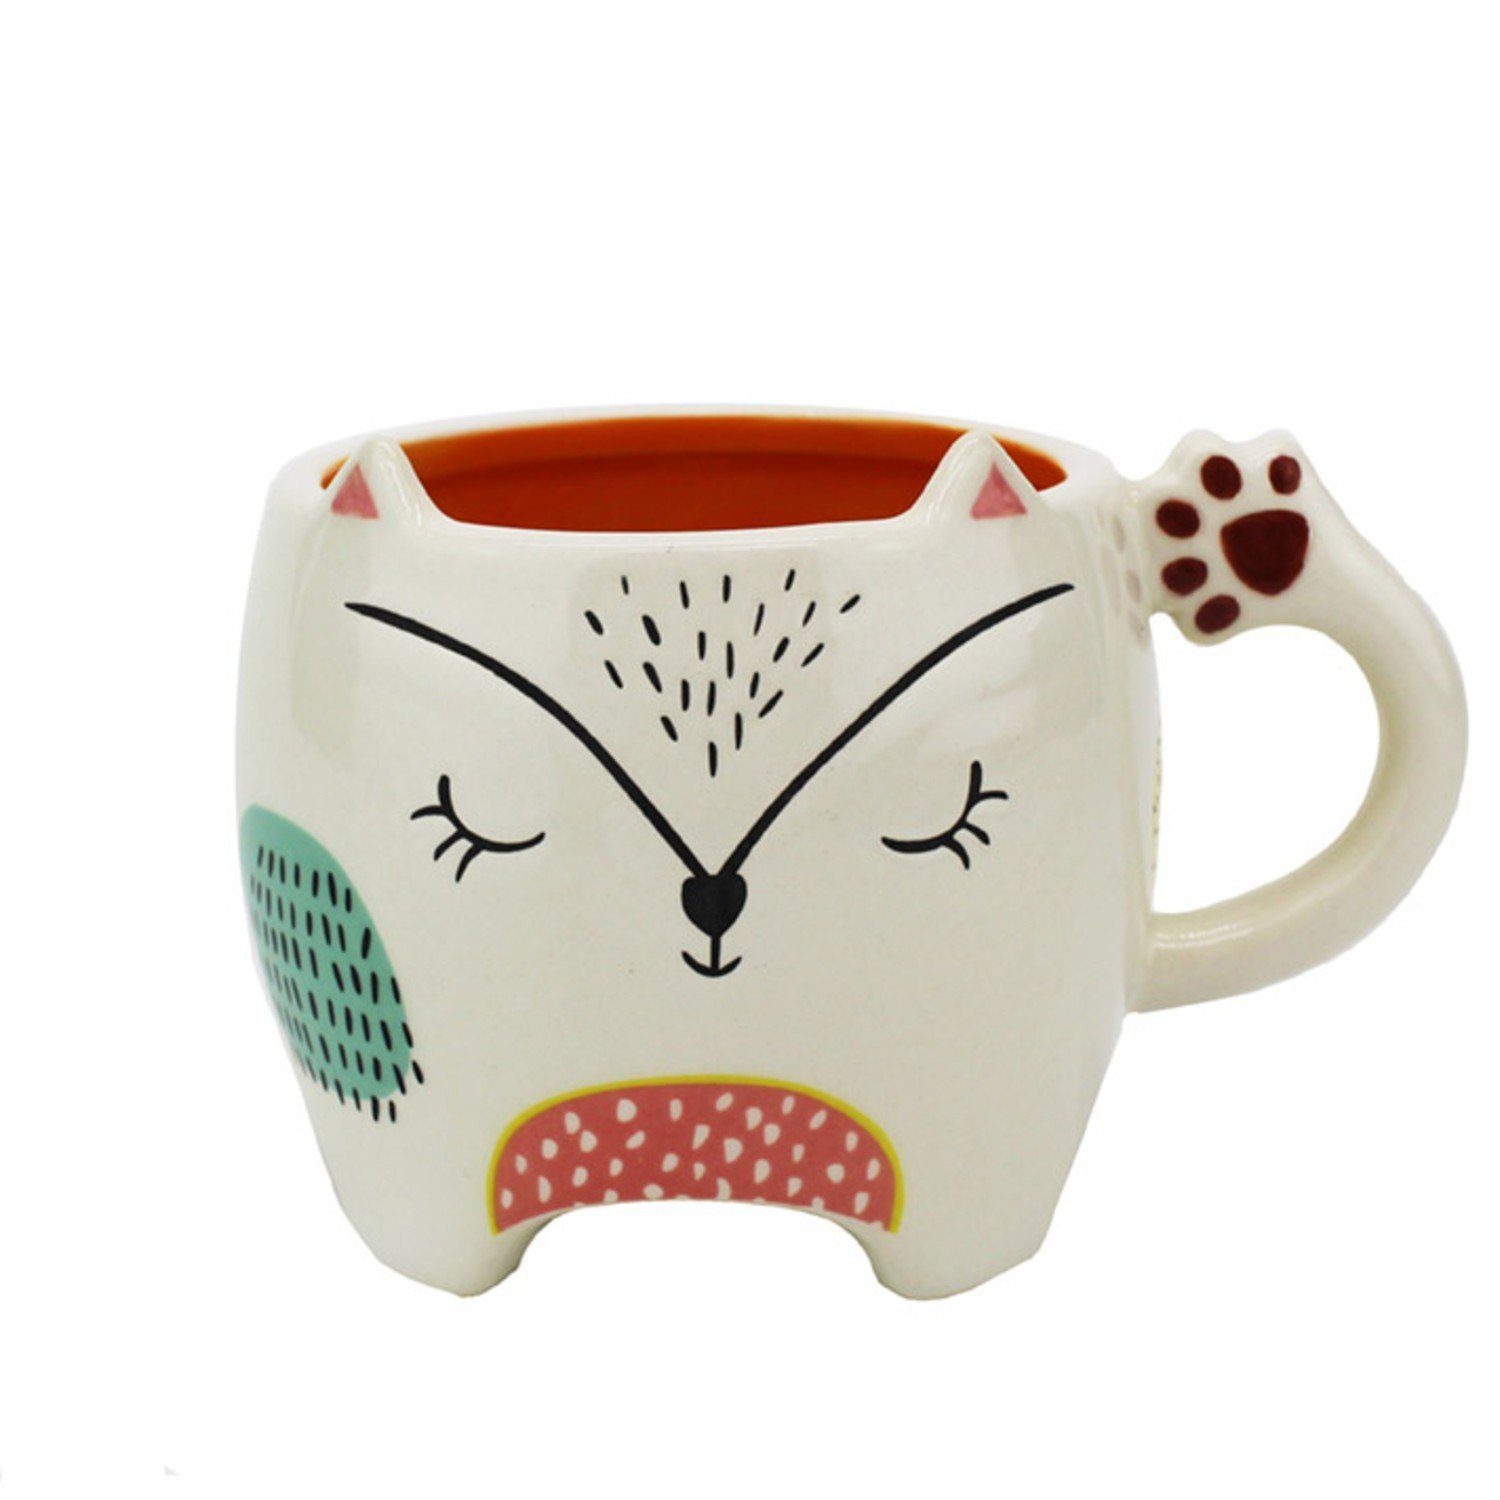 Keramik Katze Tasse Pet Art weiß/bemalt, Winkee Mug Kaffeebecher